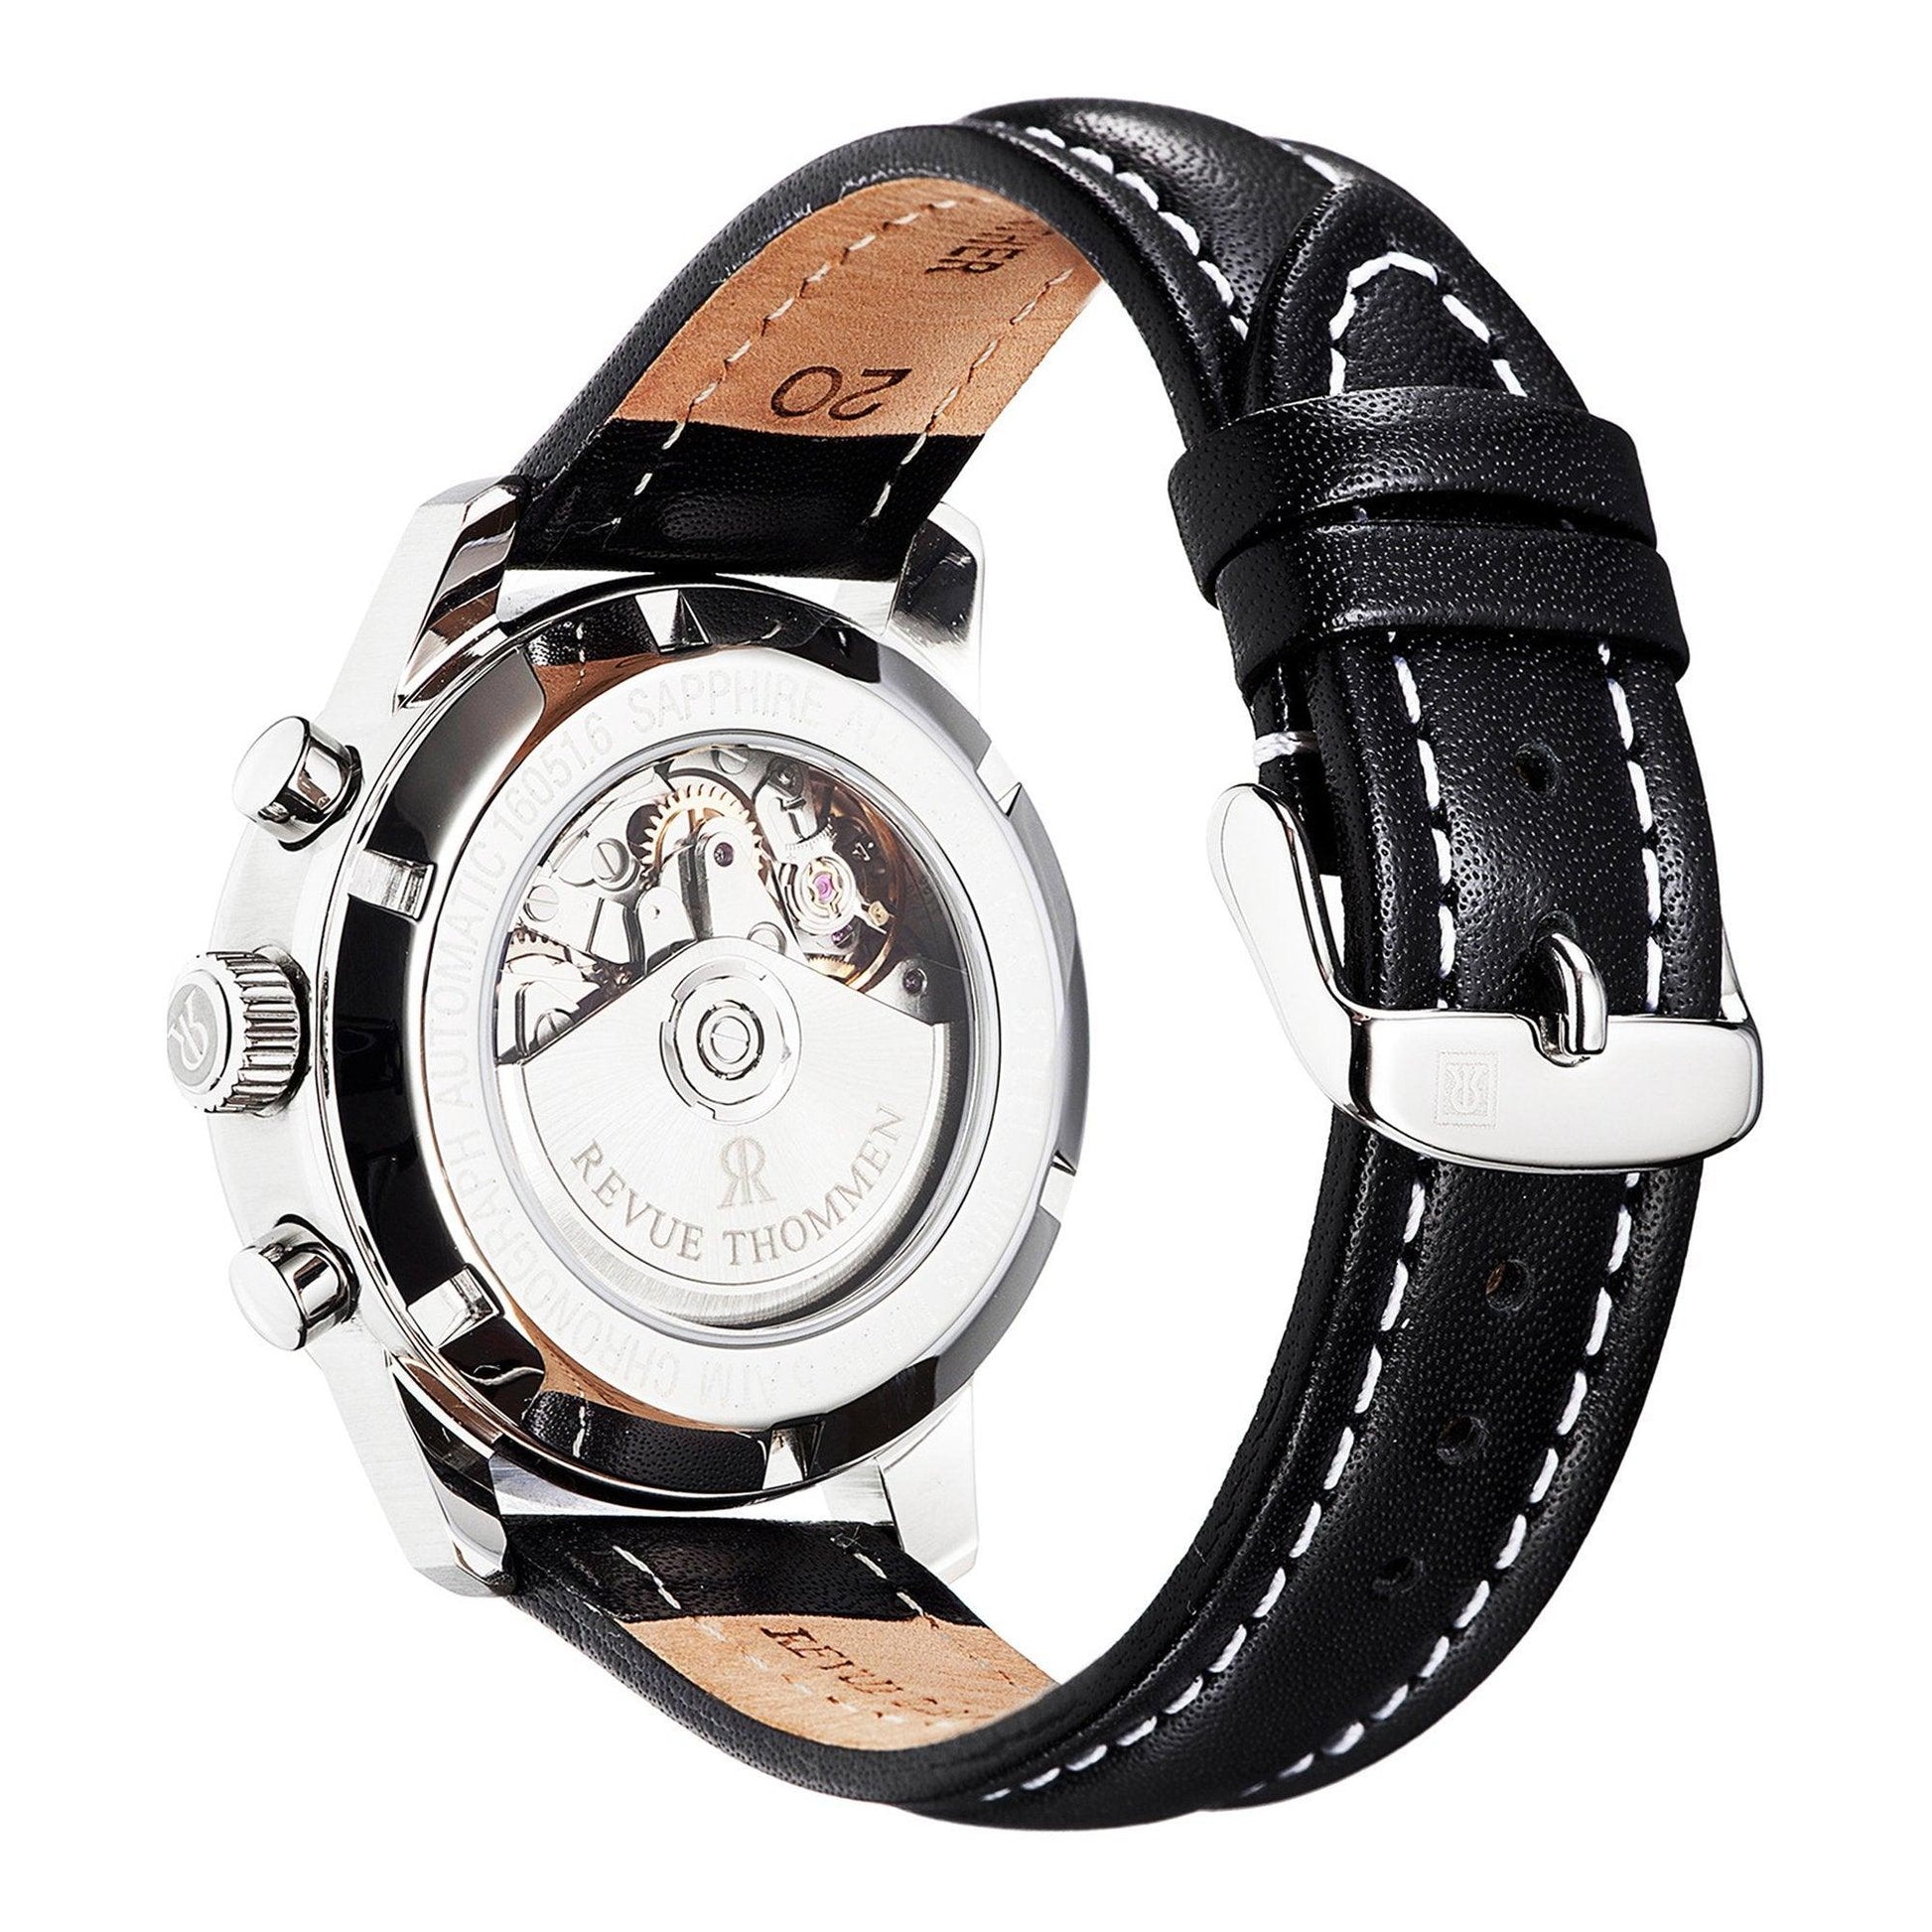 Revue Thommen Airspeed XL 16051.6537 orologio uomo meccanico - Kechiq Concept Boutique